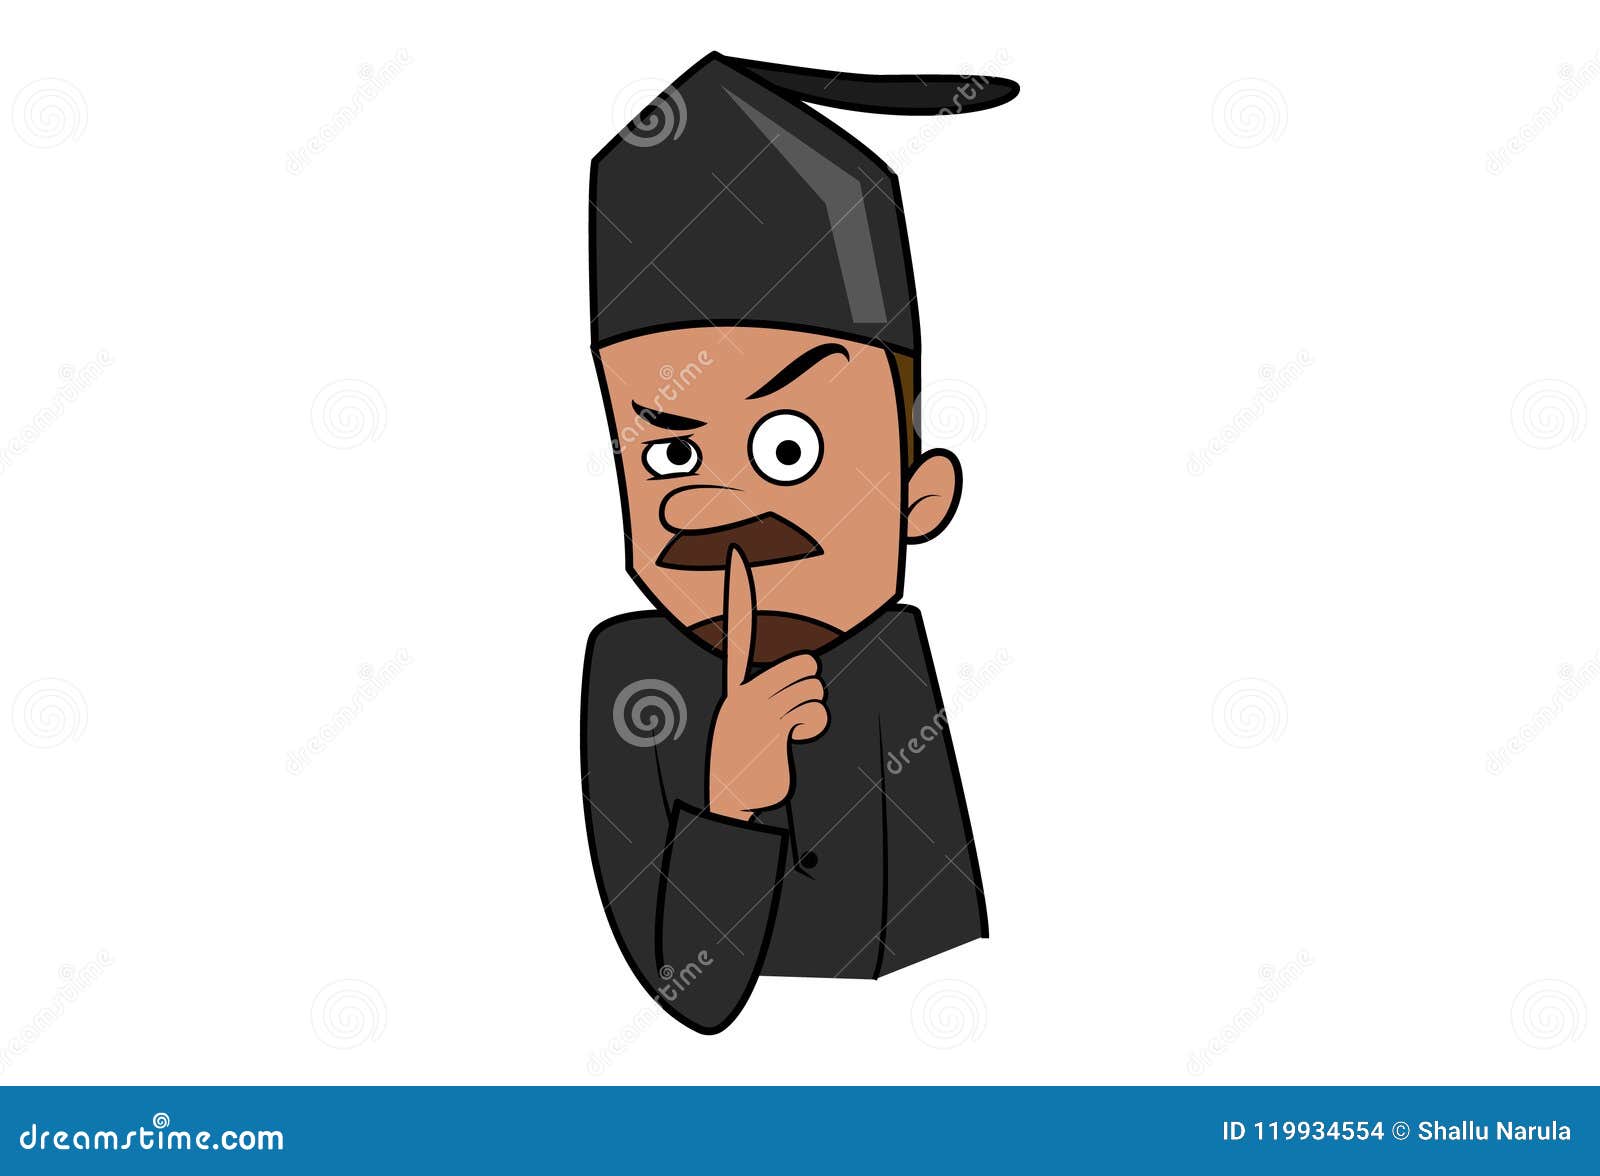 Cute Muslim Man Cartoon Illustration Stock Vector - Illustration of black,  culture: 119934554